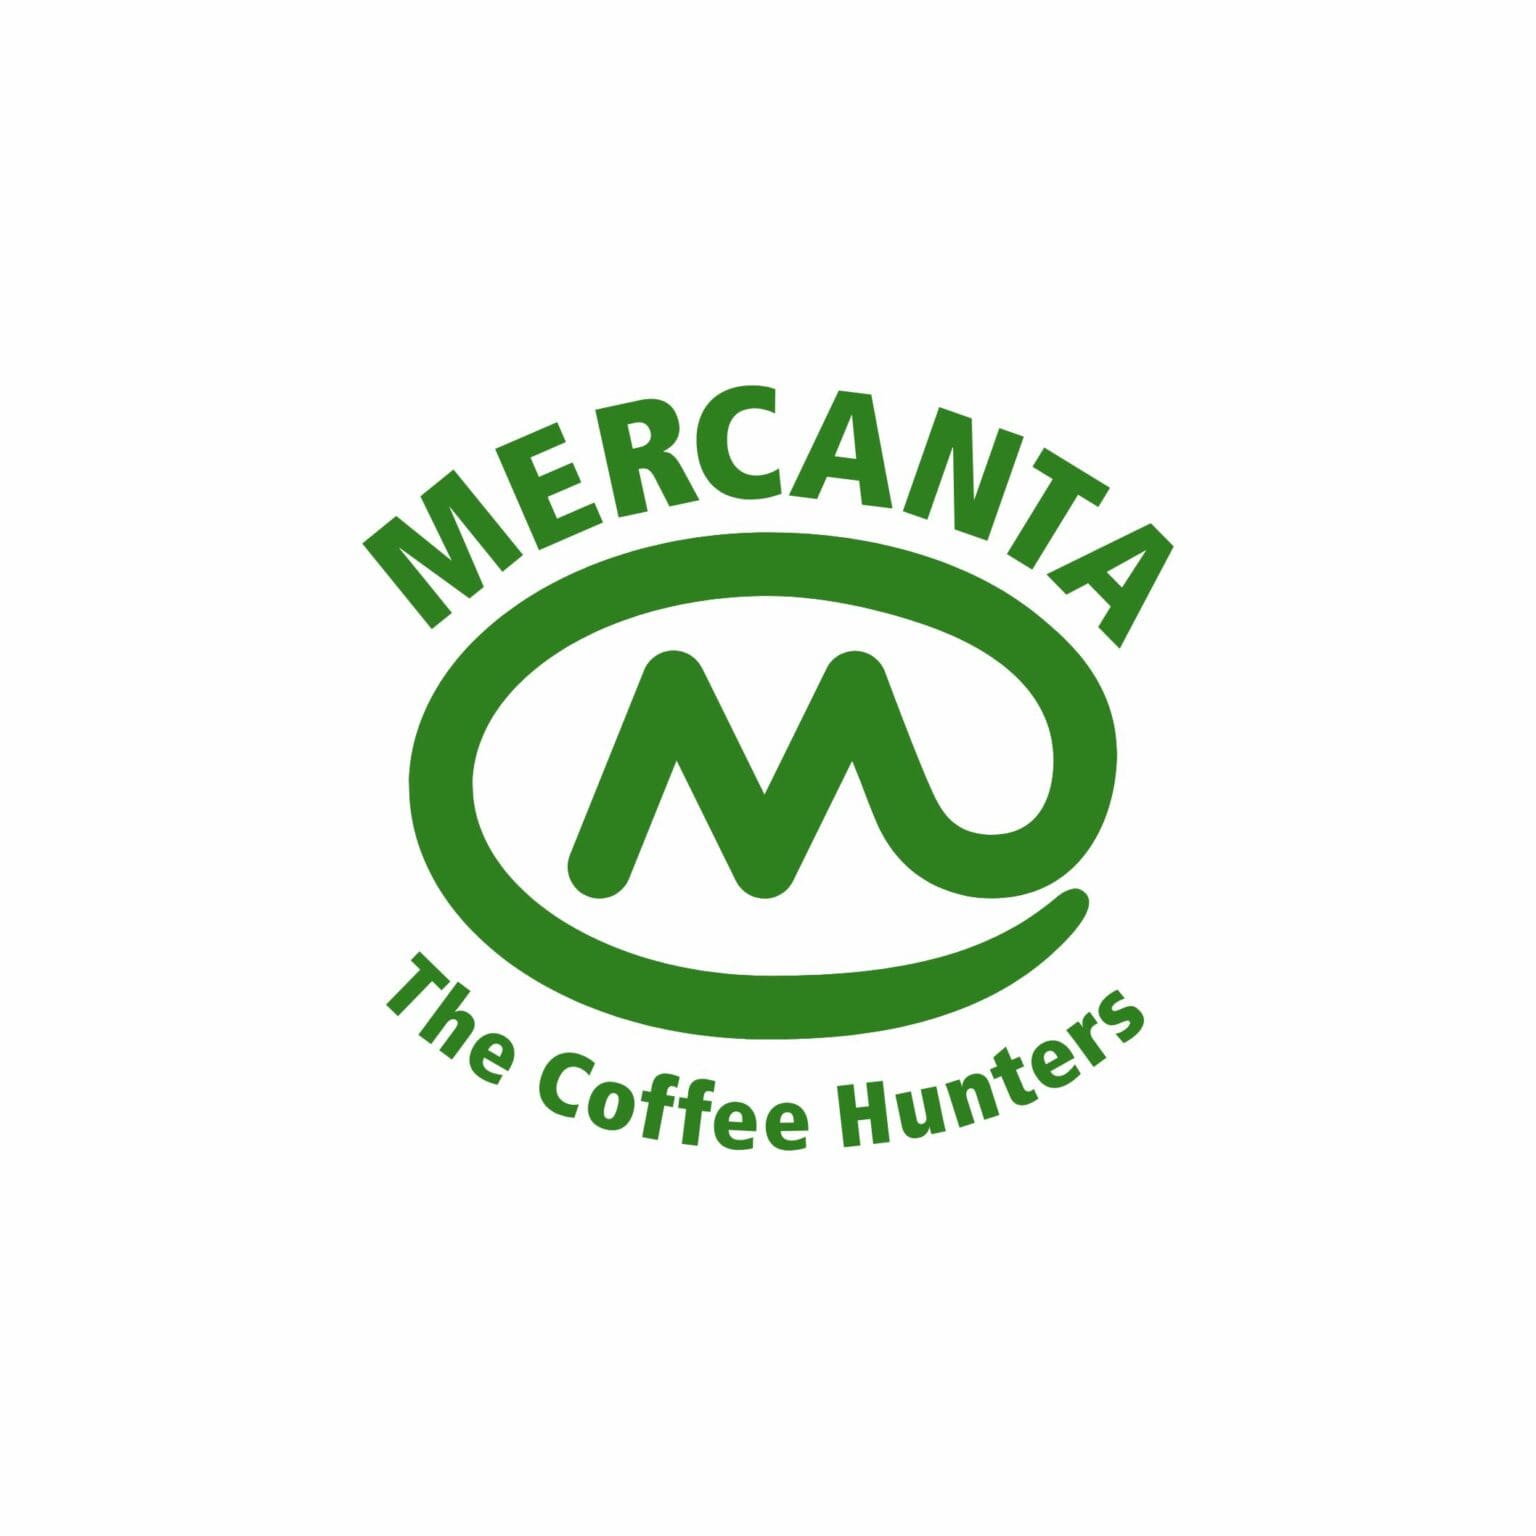 Mercanta logo by Bluestone98.com